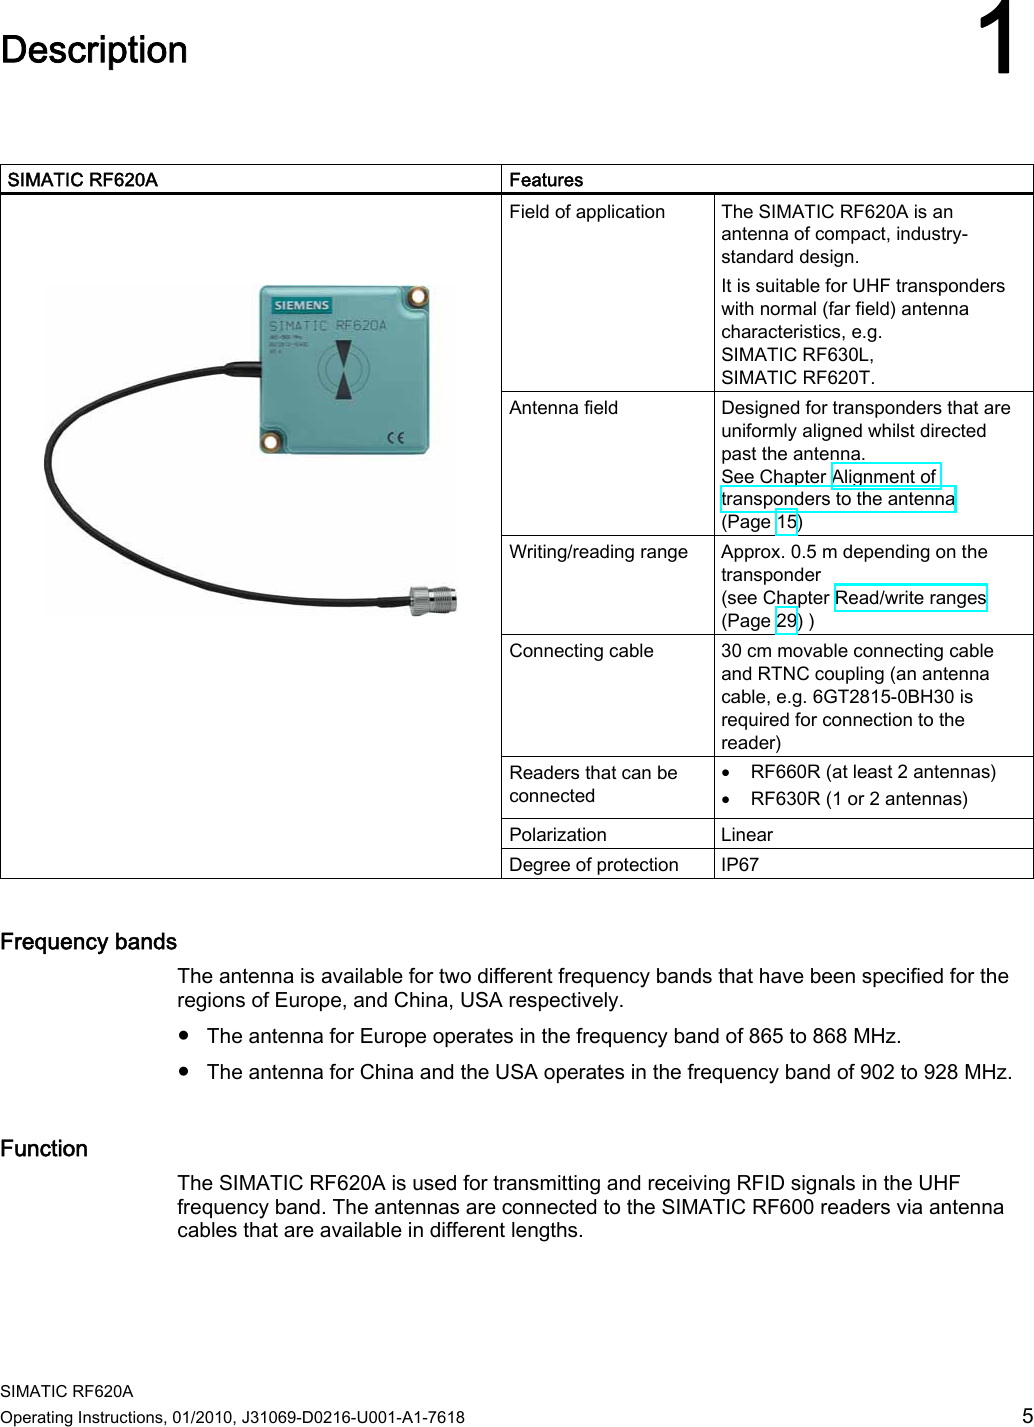 Page 5 of Siemens RF660 RFID reader User Manual SIMATIC RF620A